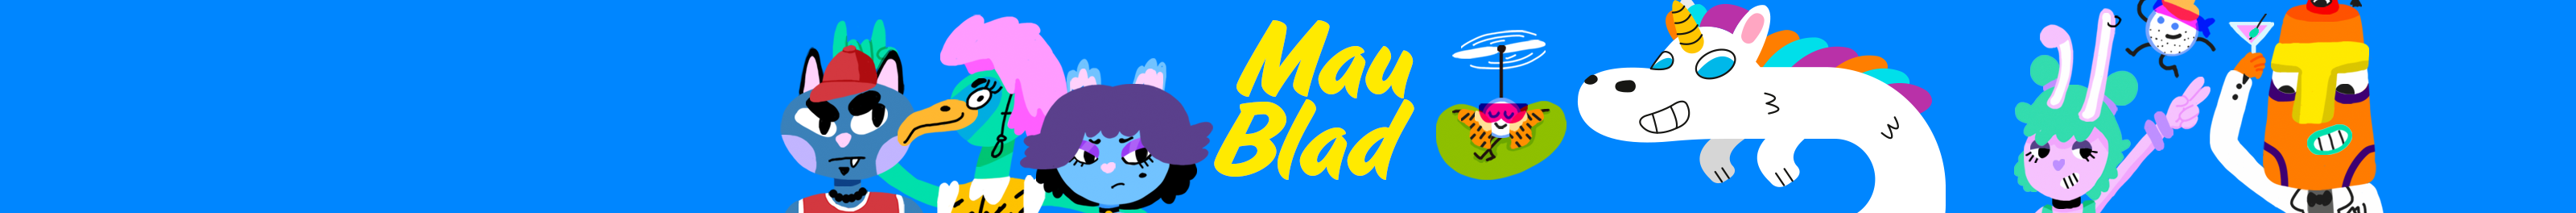 Mau Blad's profile banner